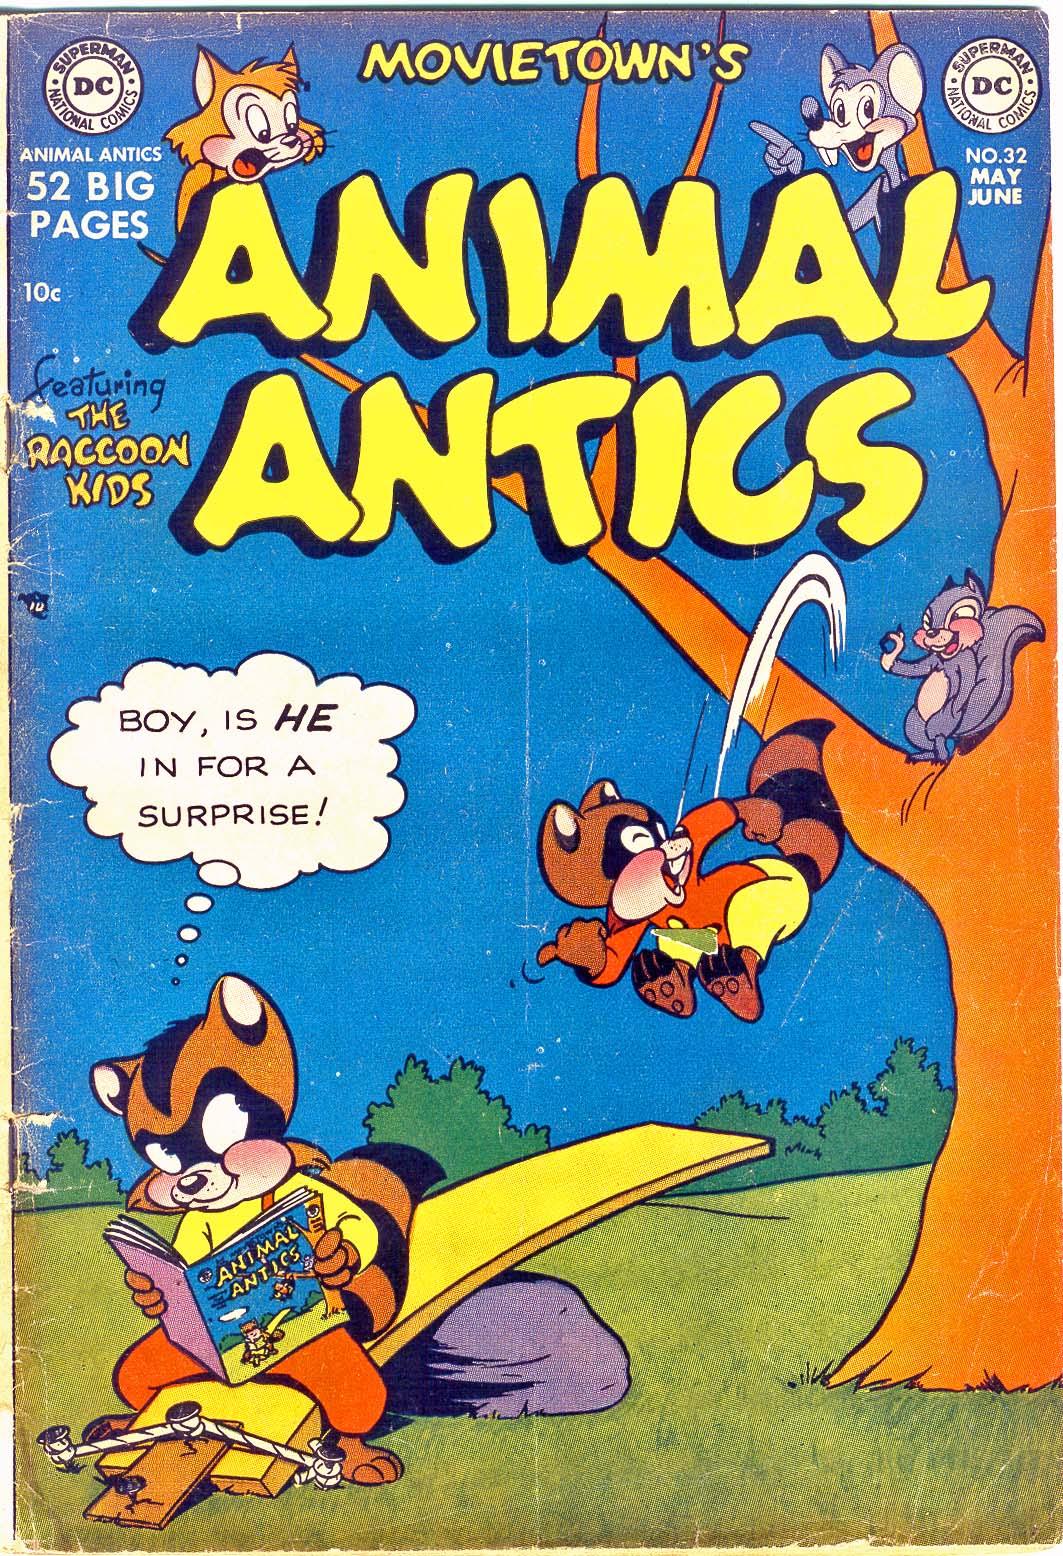 Movietown's Animal Antics Vol. 1 #32